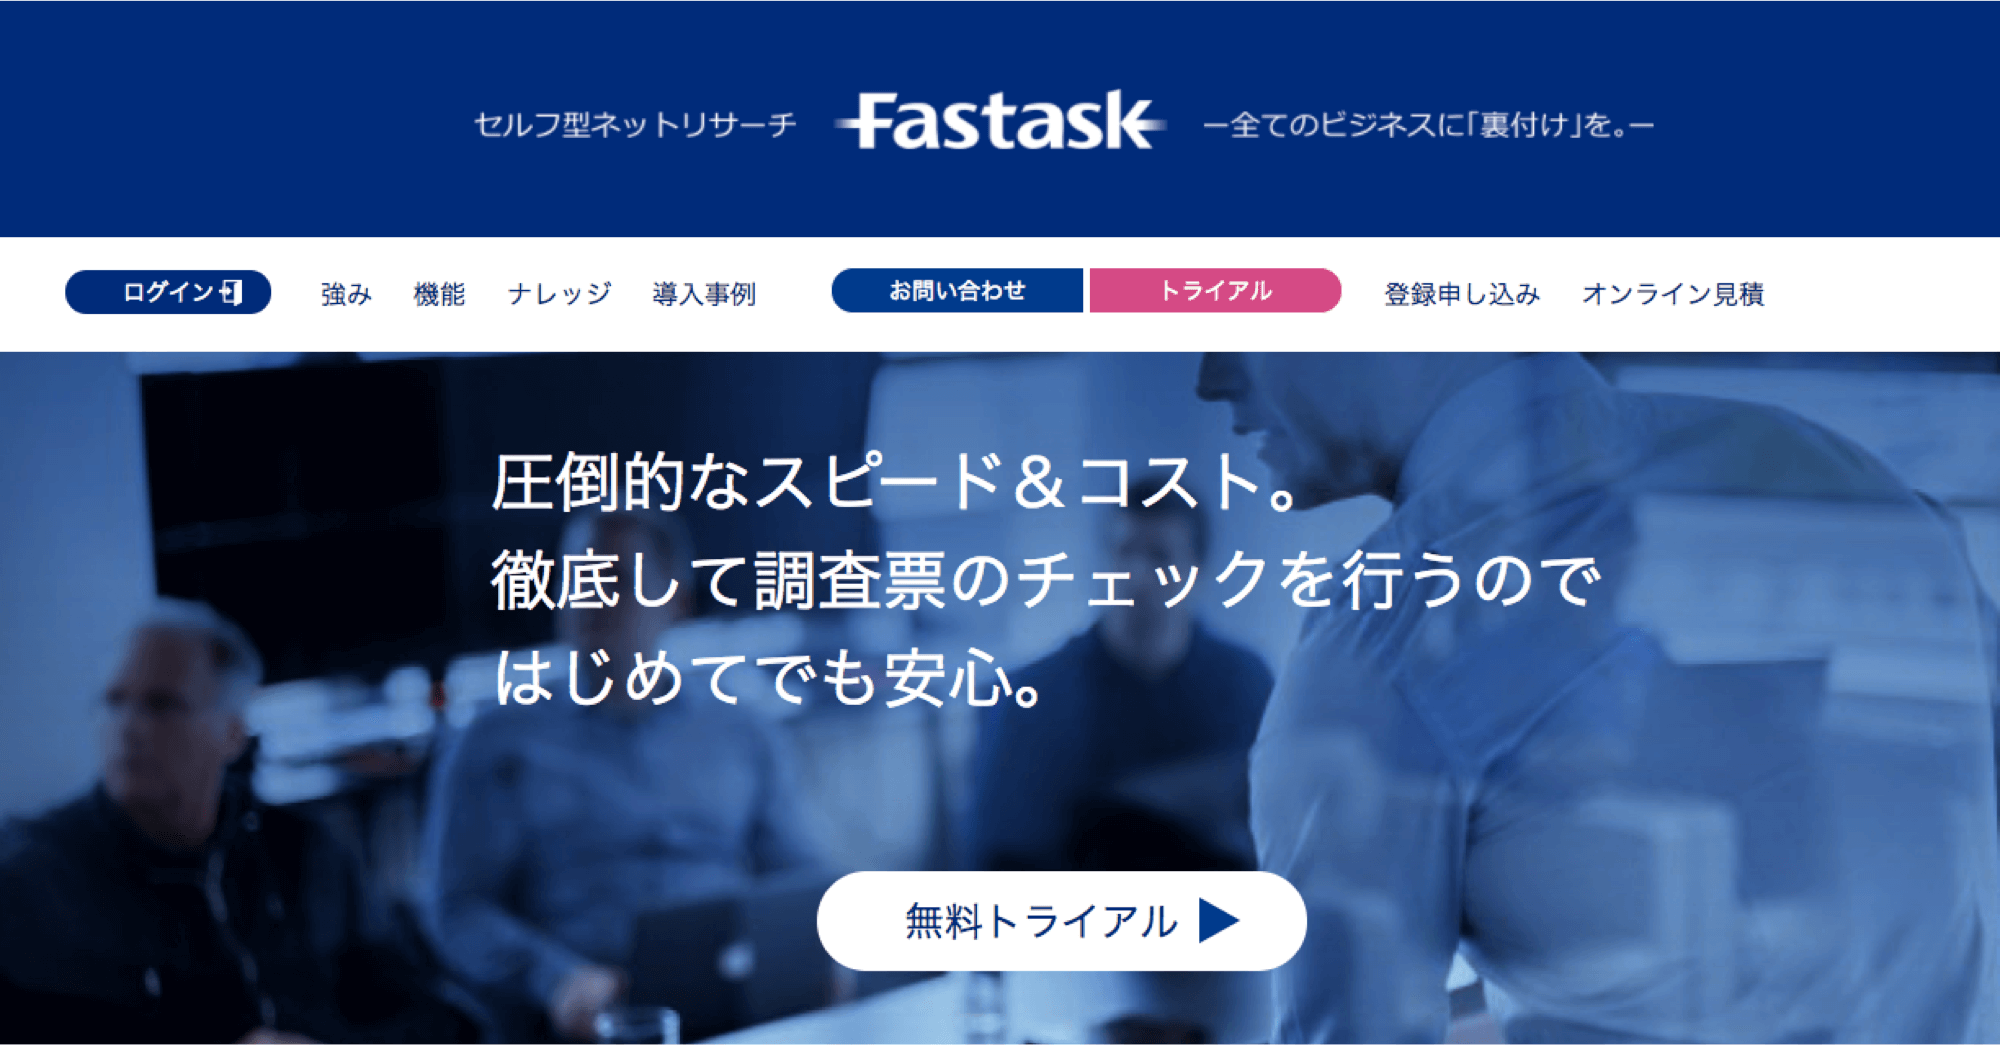 Fasttask（ジャストシステム）